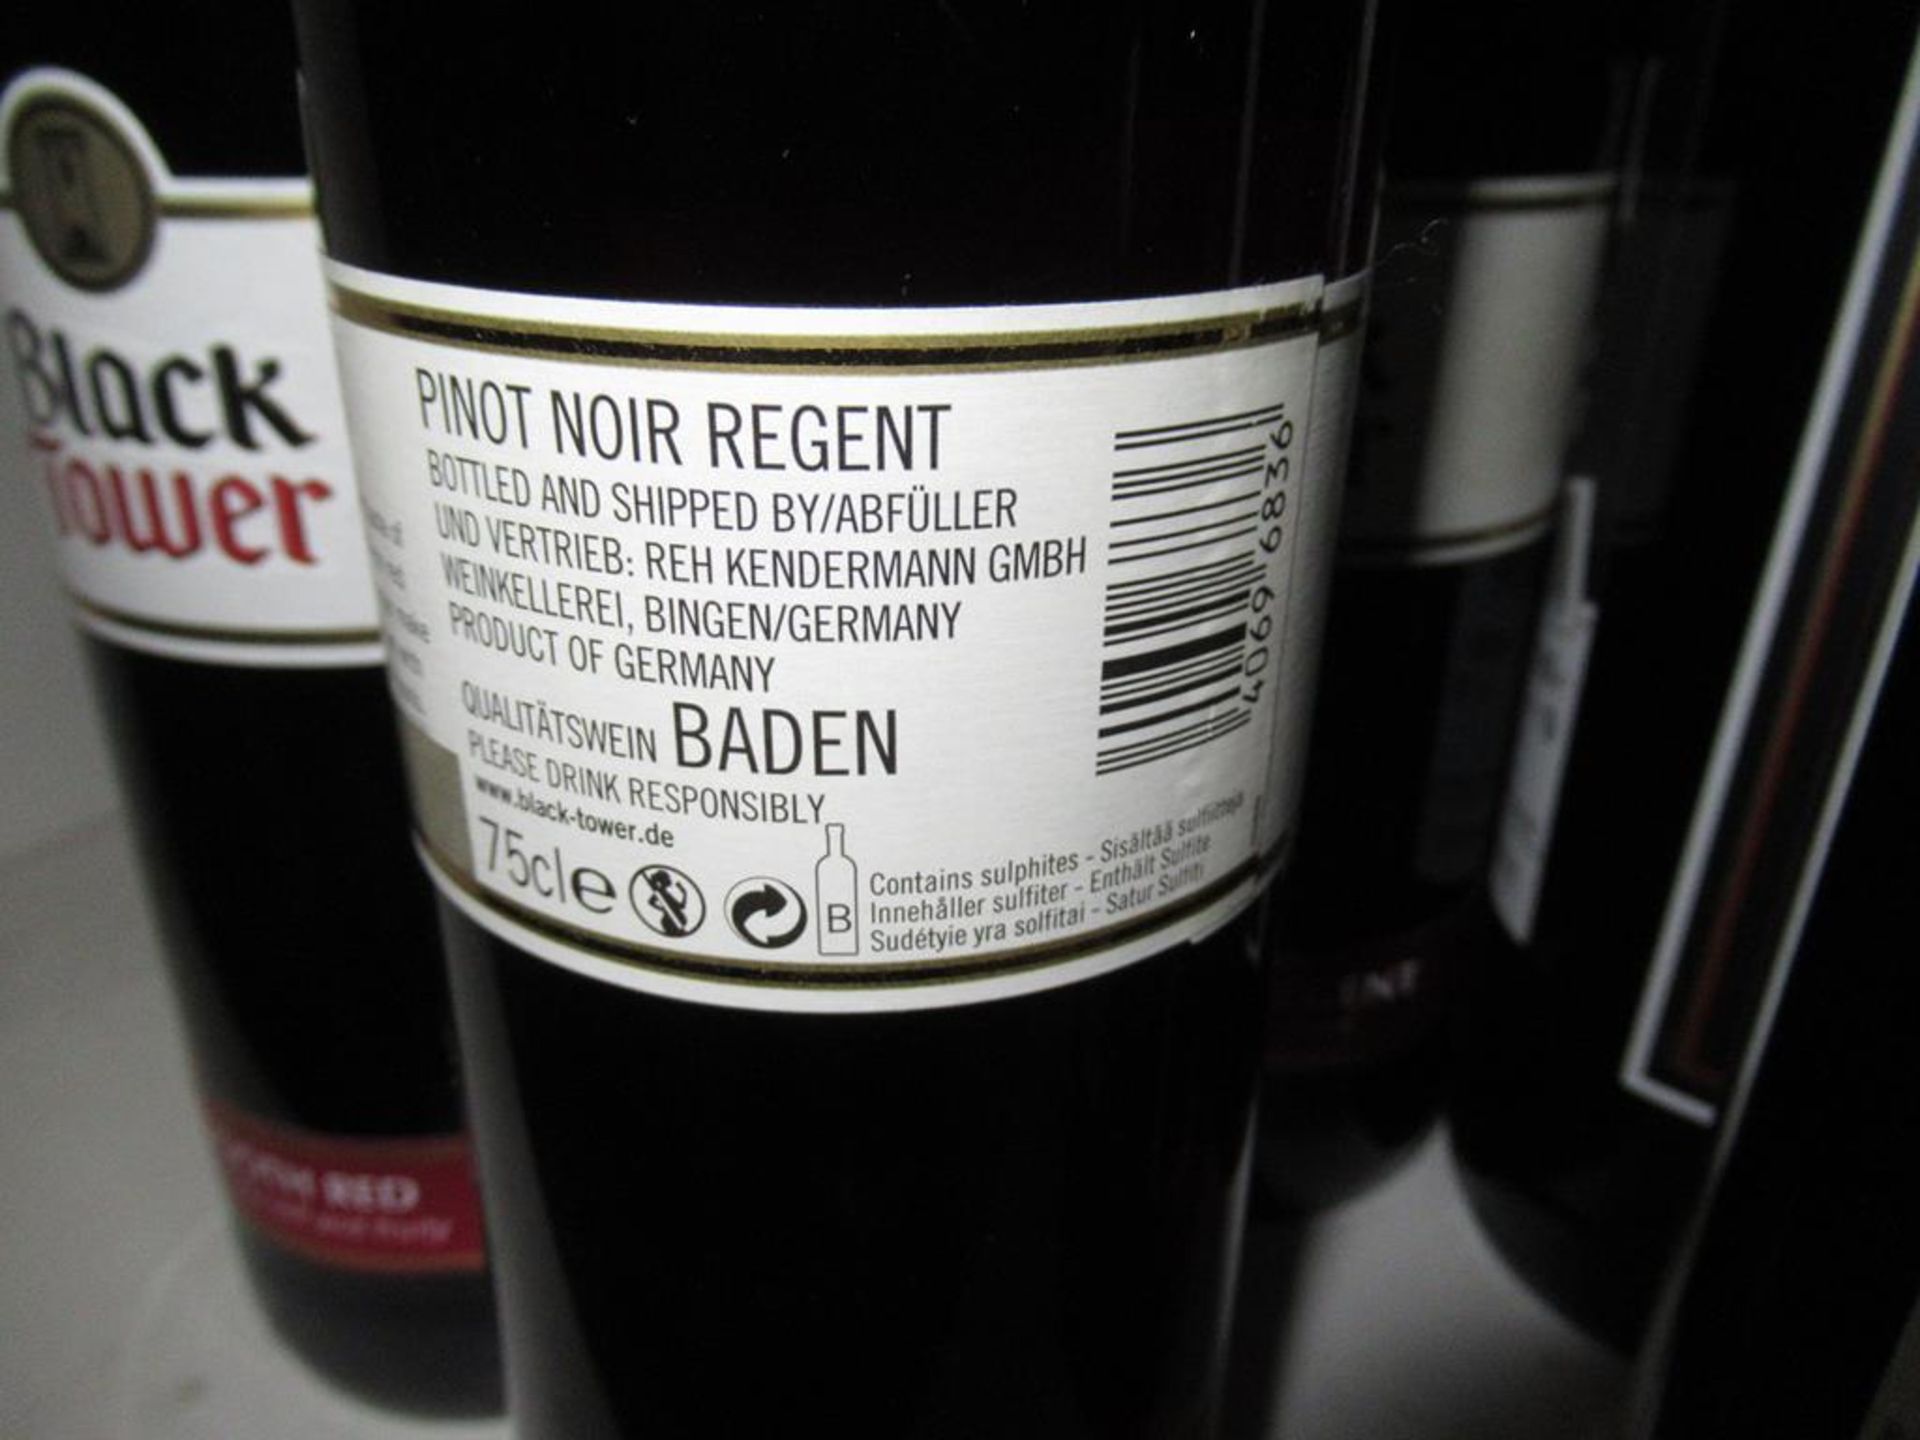 Six bottles of Black Tower Pinot Noir Regent red wine, four bottles of Black Tower smooth red wine, - Image 8 of 11